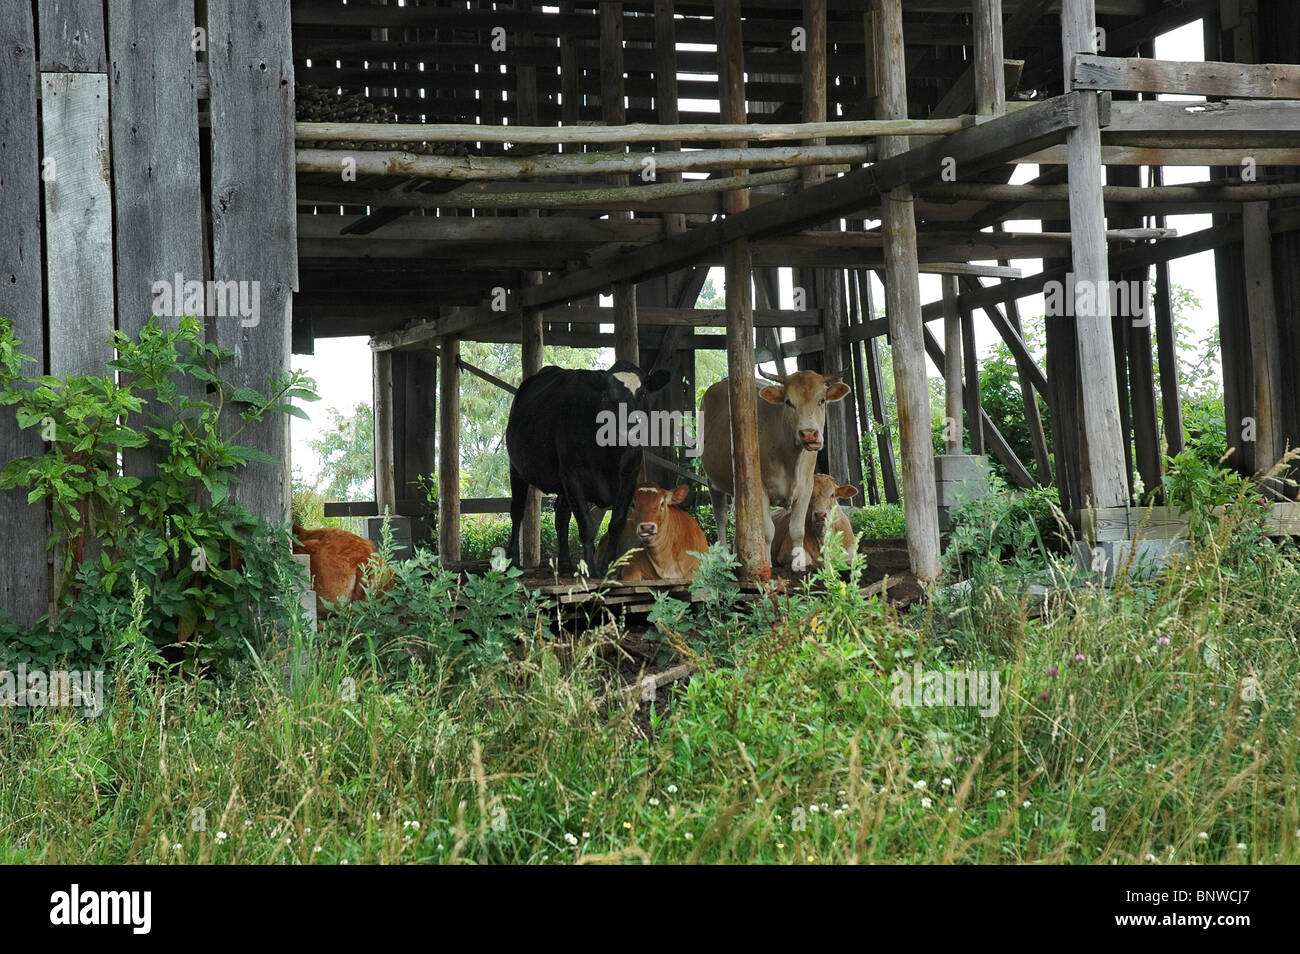 Cows seek refuge in old dilapidated barn, eastern Kentucky. Stock Photo